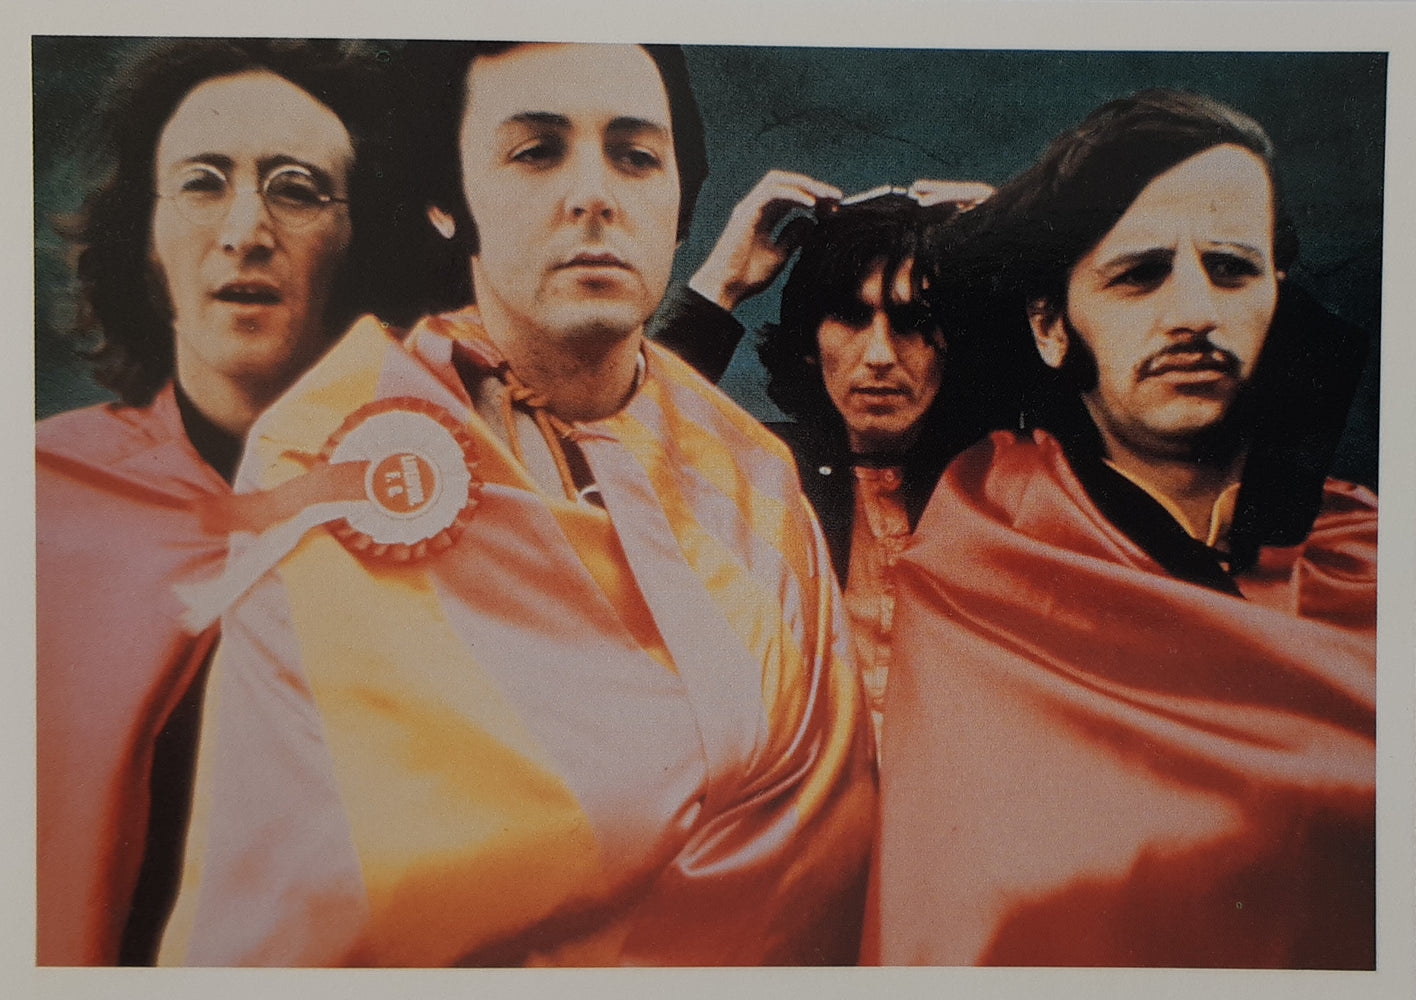 The Beatles Capes Photo Shoot Postcard